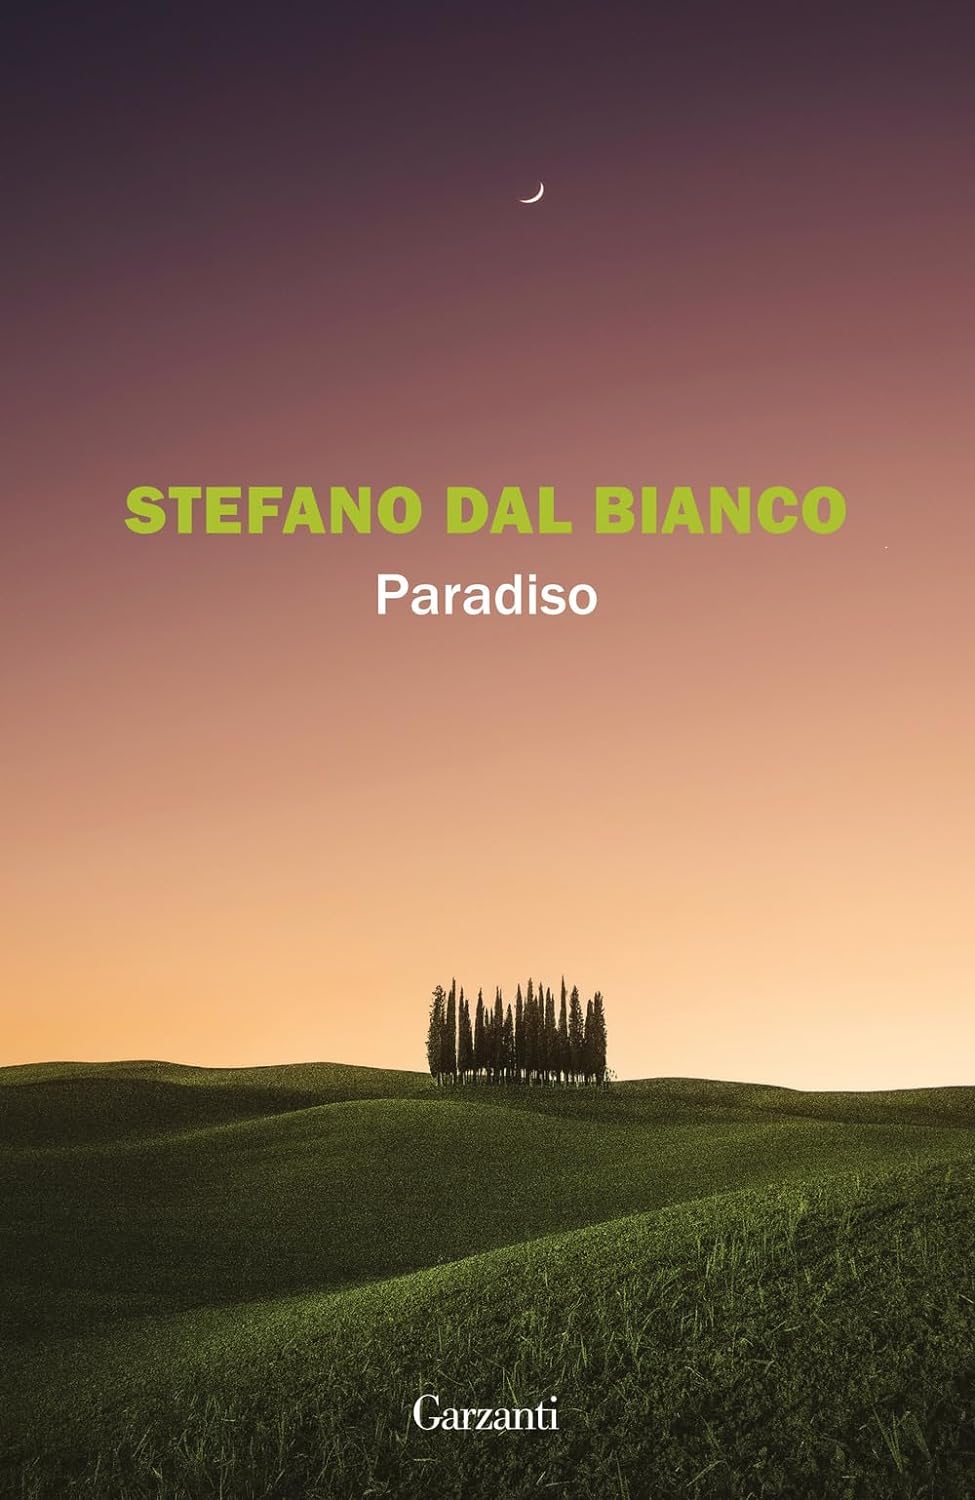 Stefano Dal Bianco – Paradiso